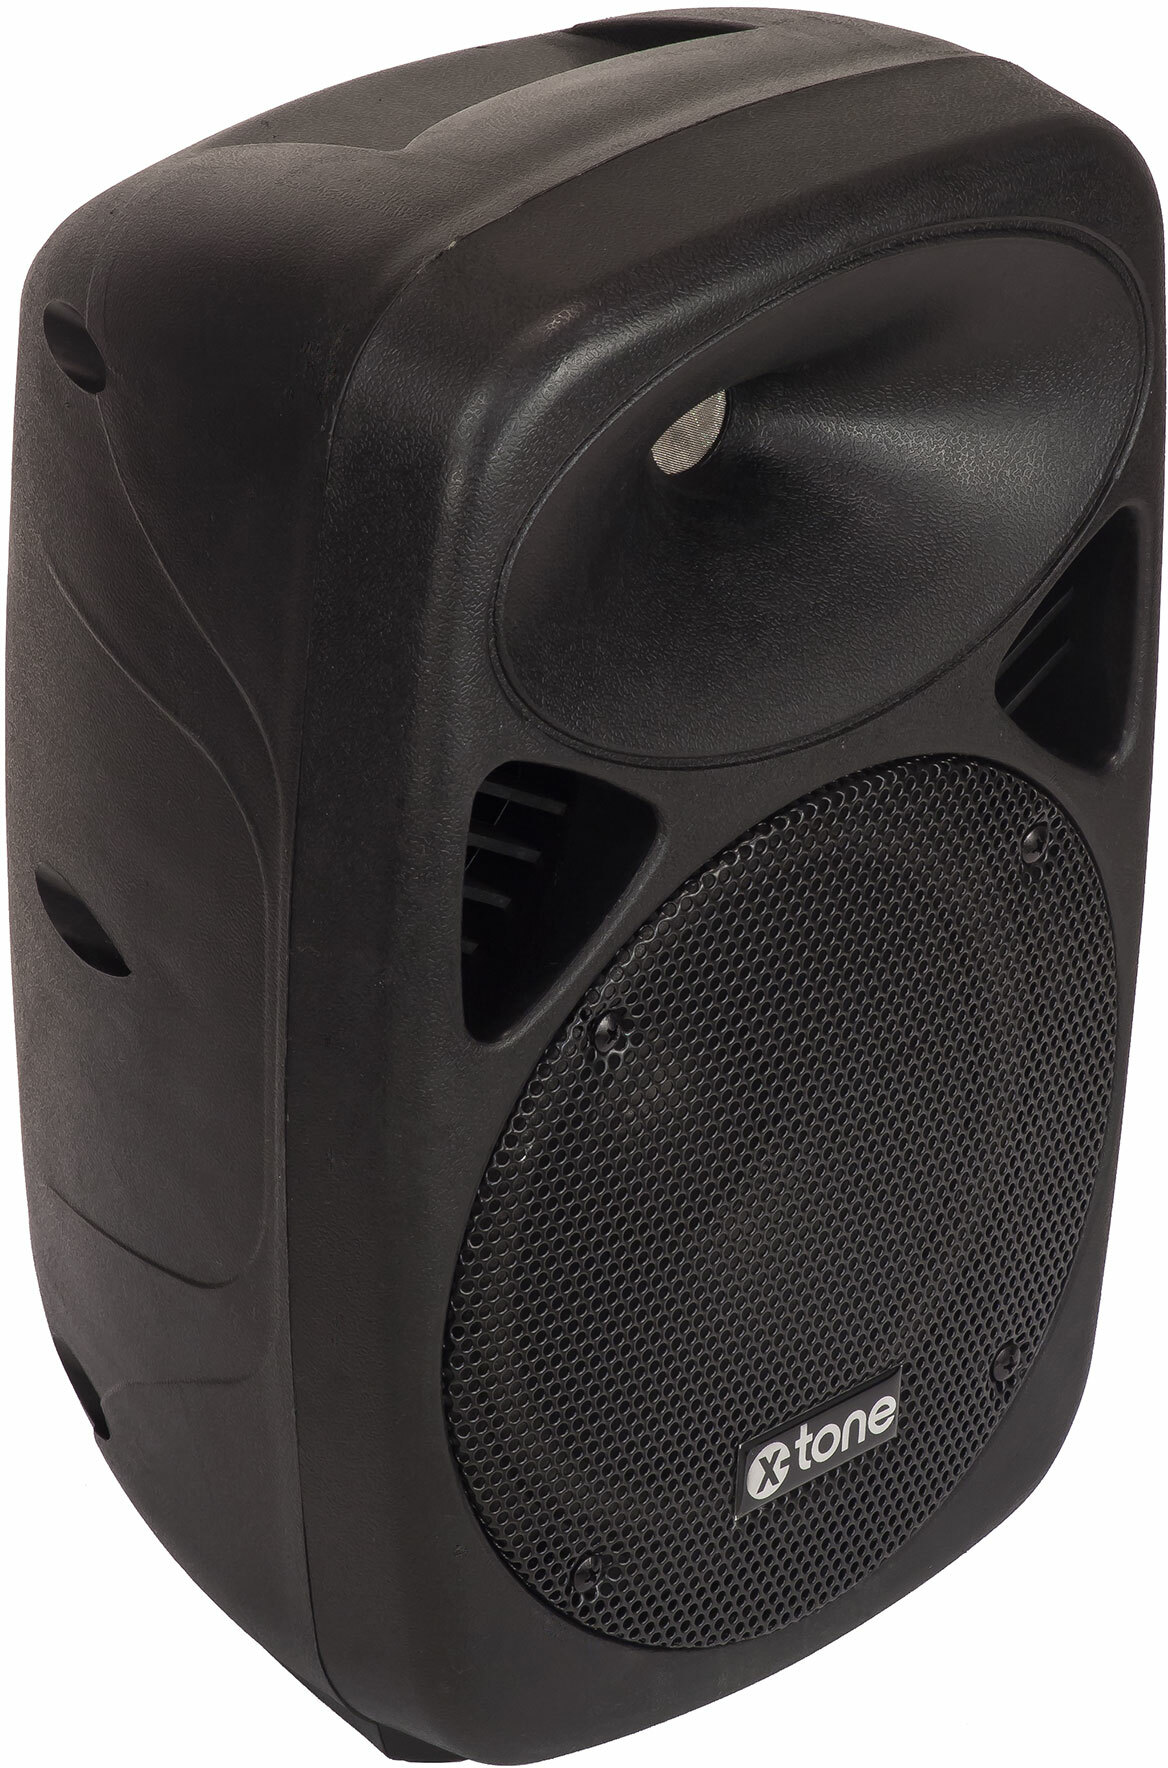 X-tone Sma-8 - Active full-range speaker - Main picture